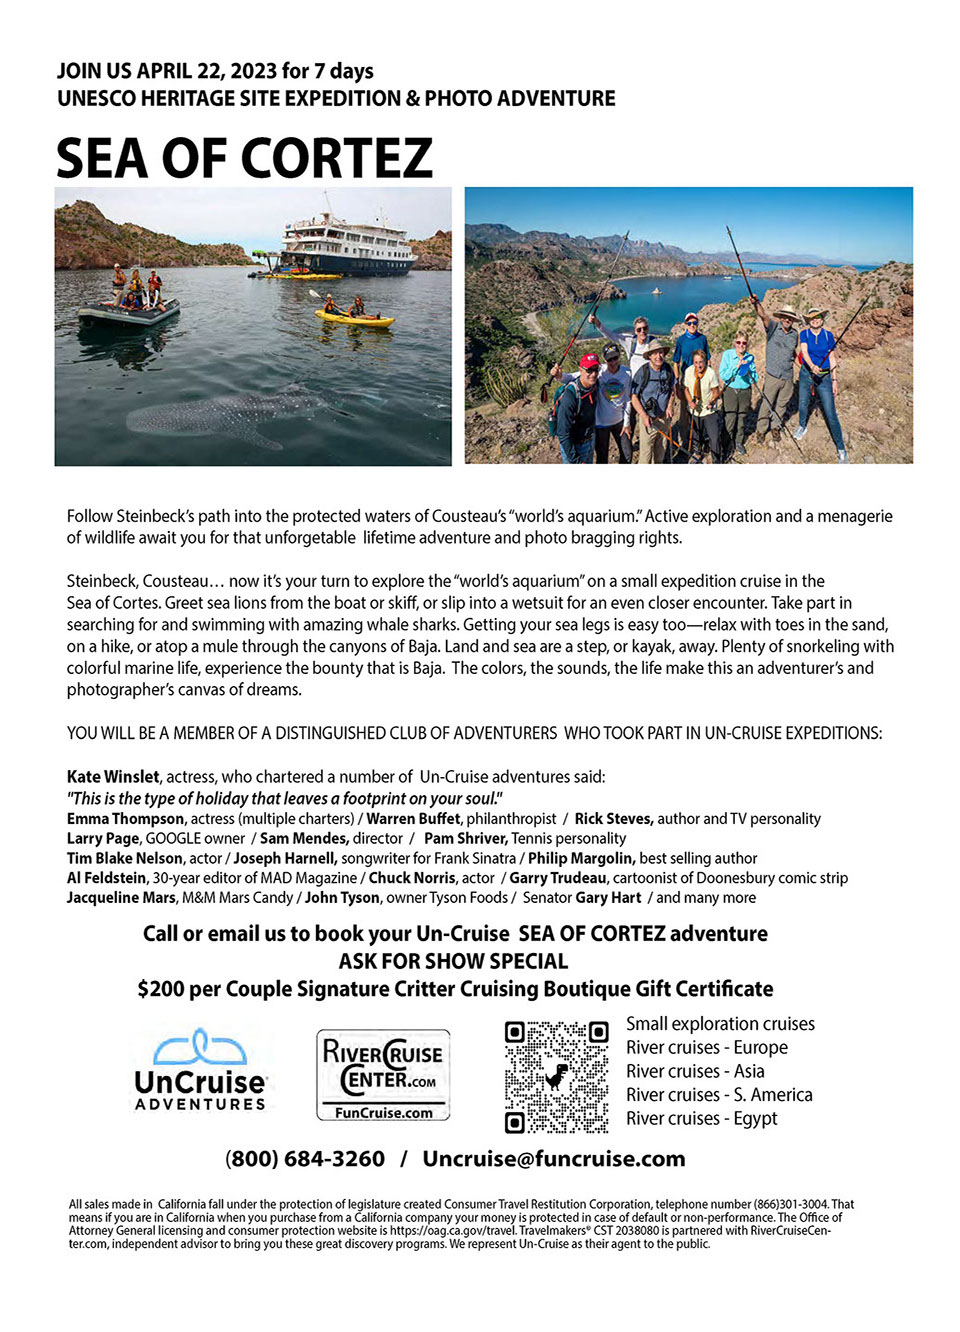 UNESCO Sea of Cortez Expedition. Whales, adventure cruise